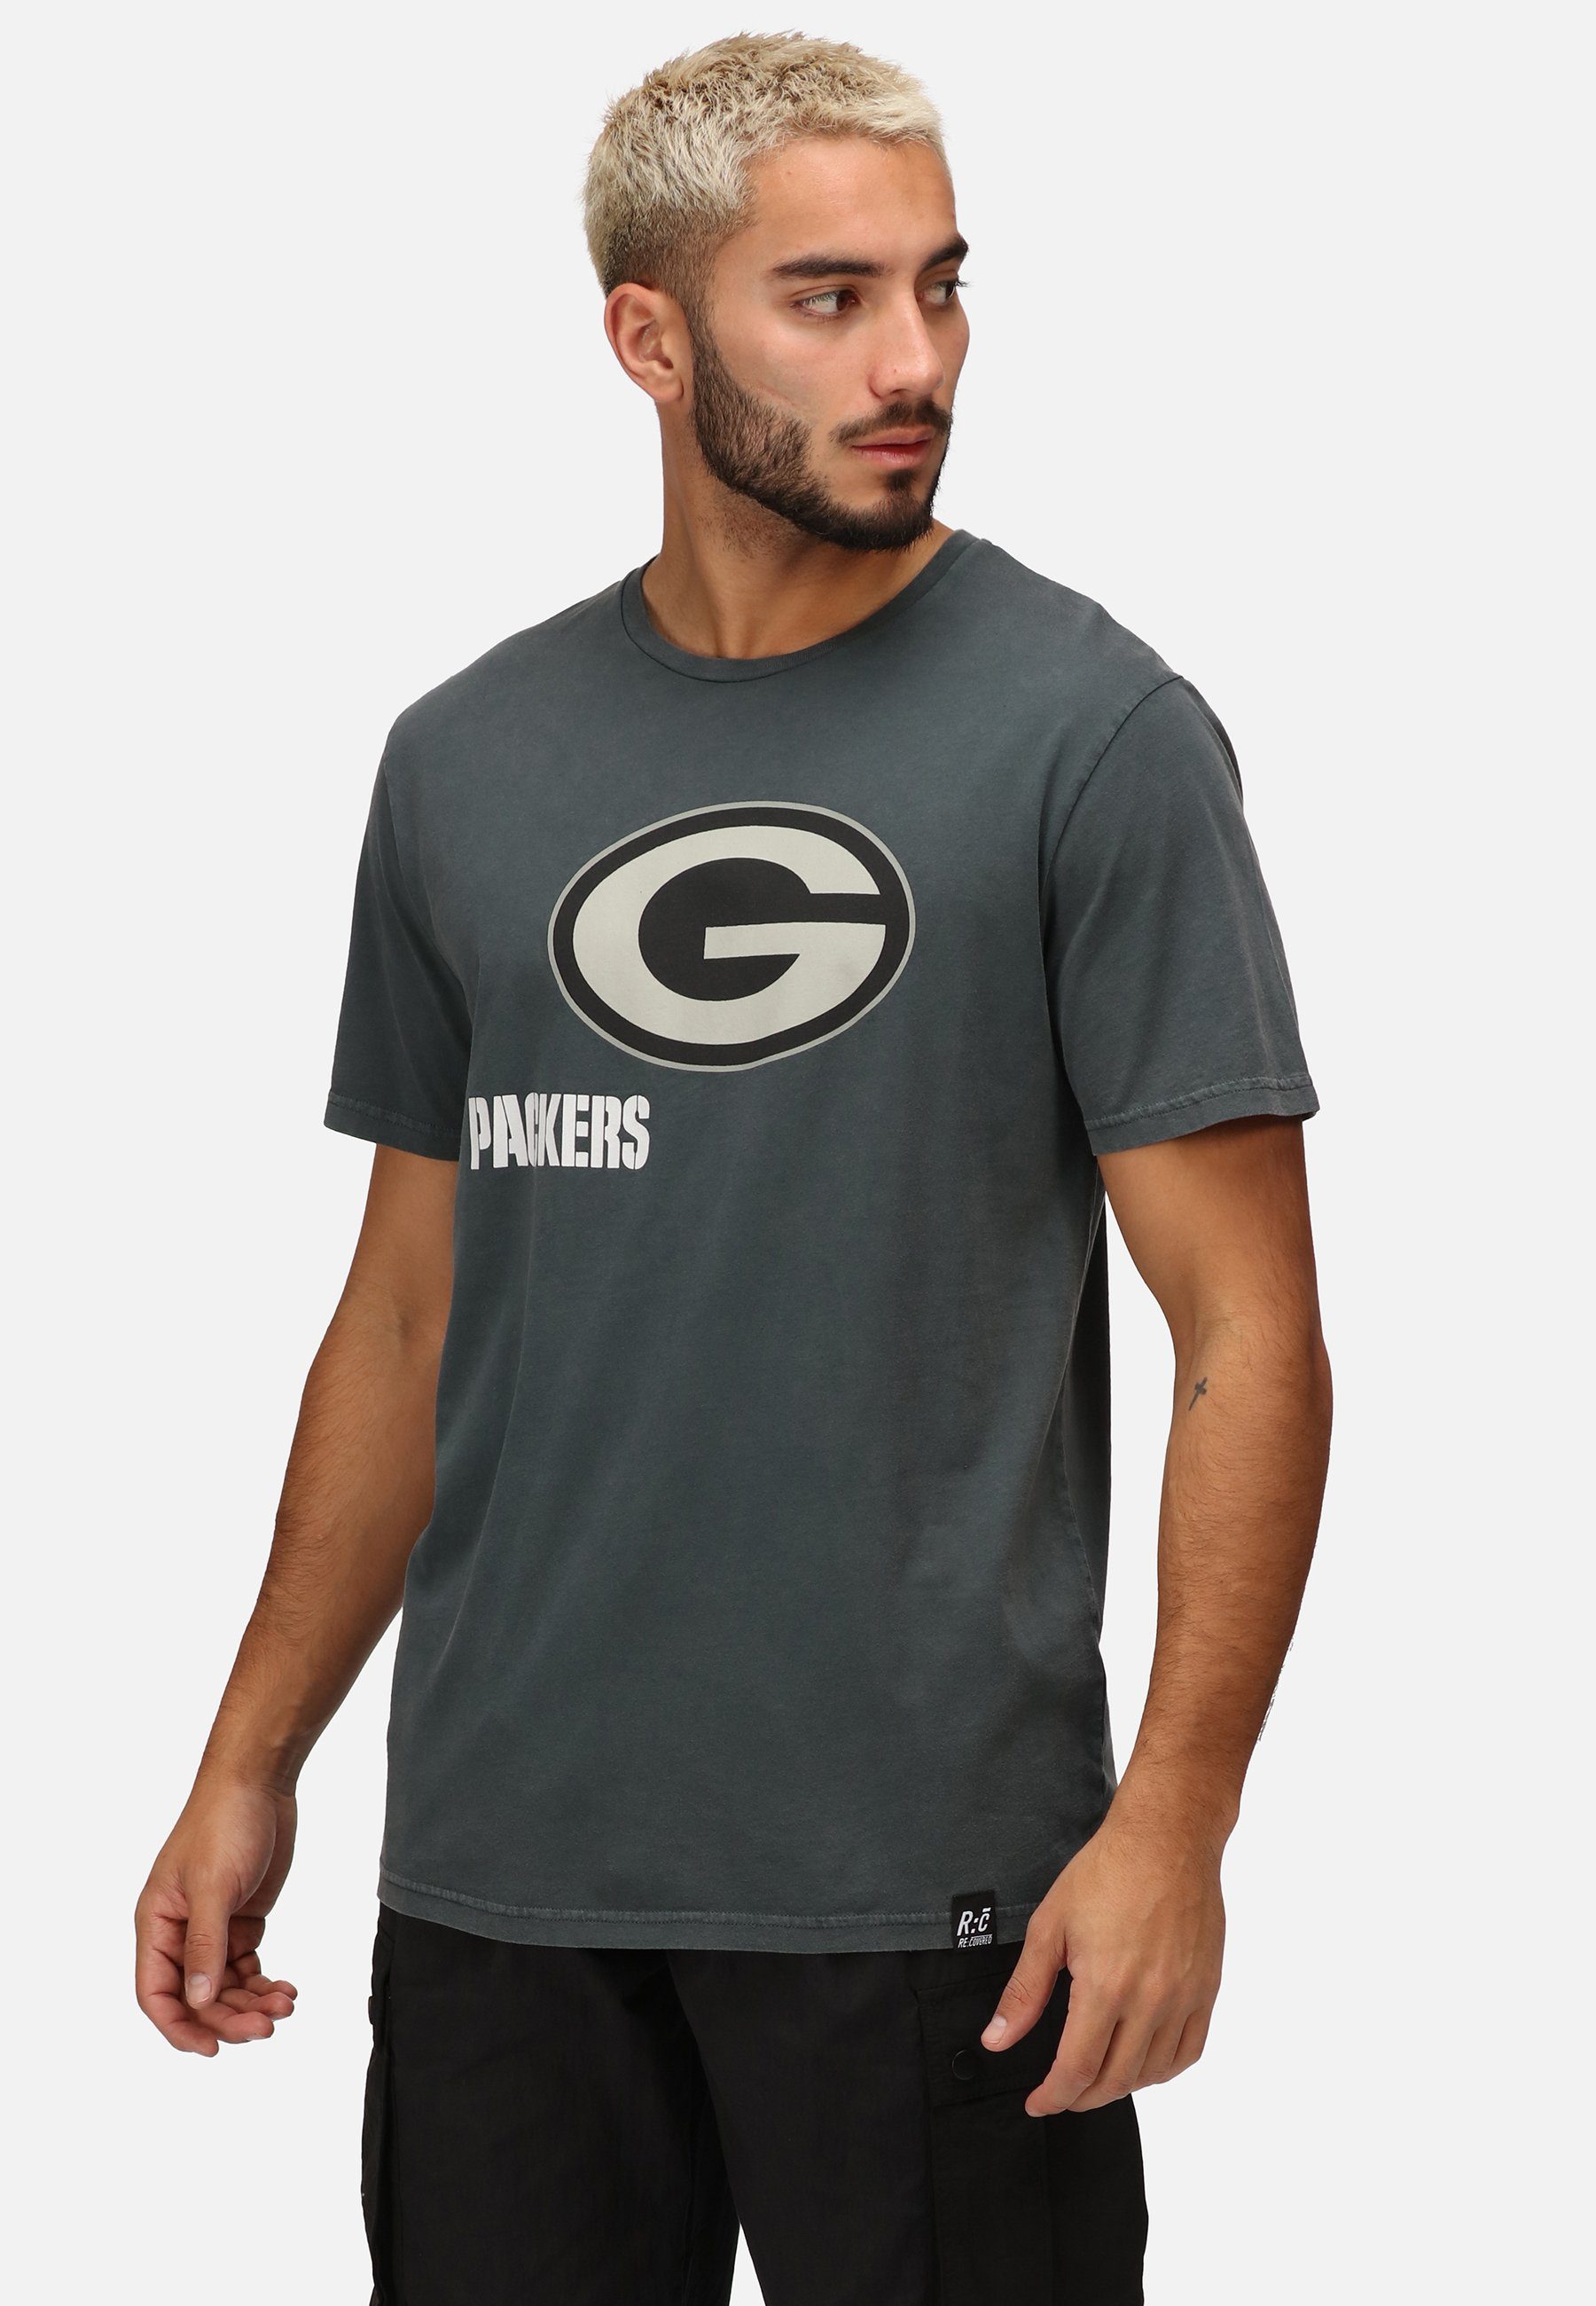 PACKERS MONOCHROME GOTS Recovered T-Shirt Bio-Baumwolle NFL zertifizierte